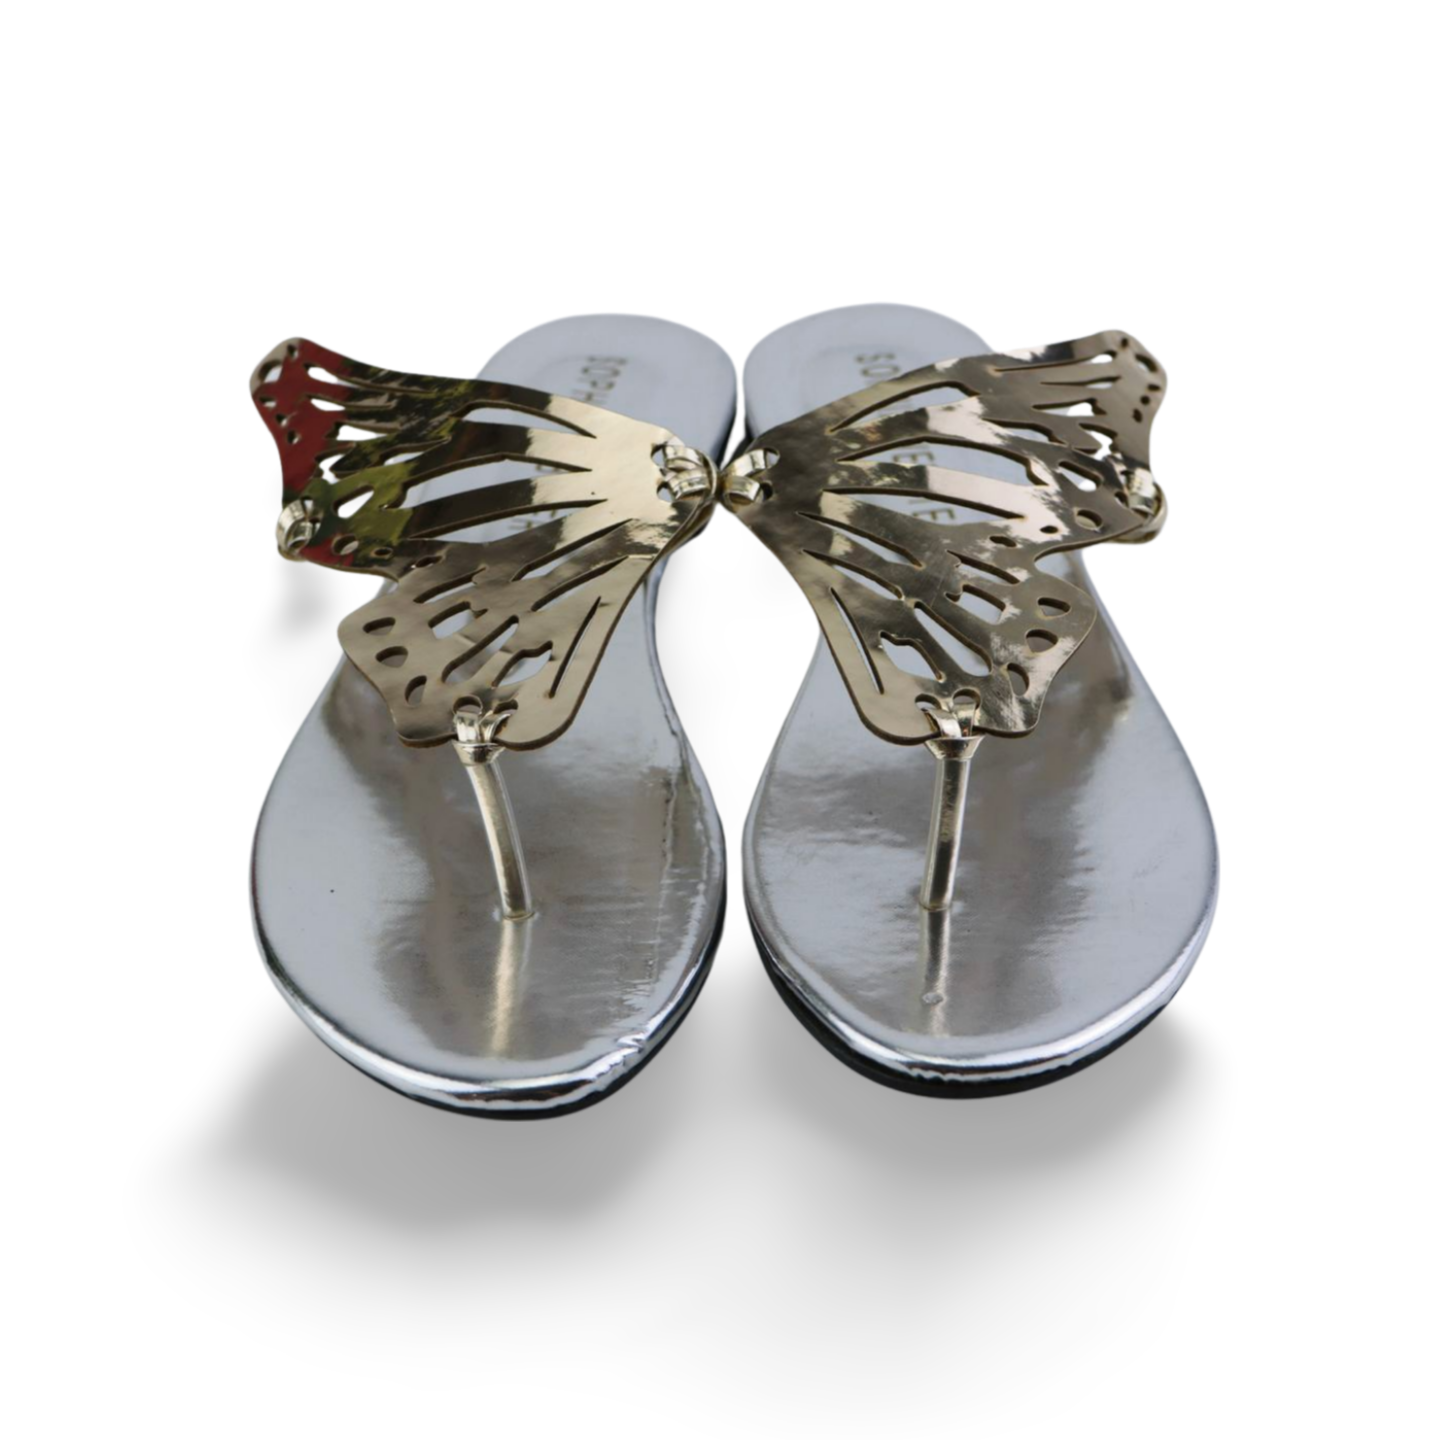 Beautiful Butterfly Flat Slippers